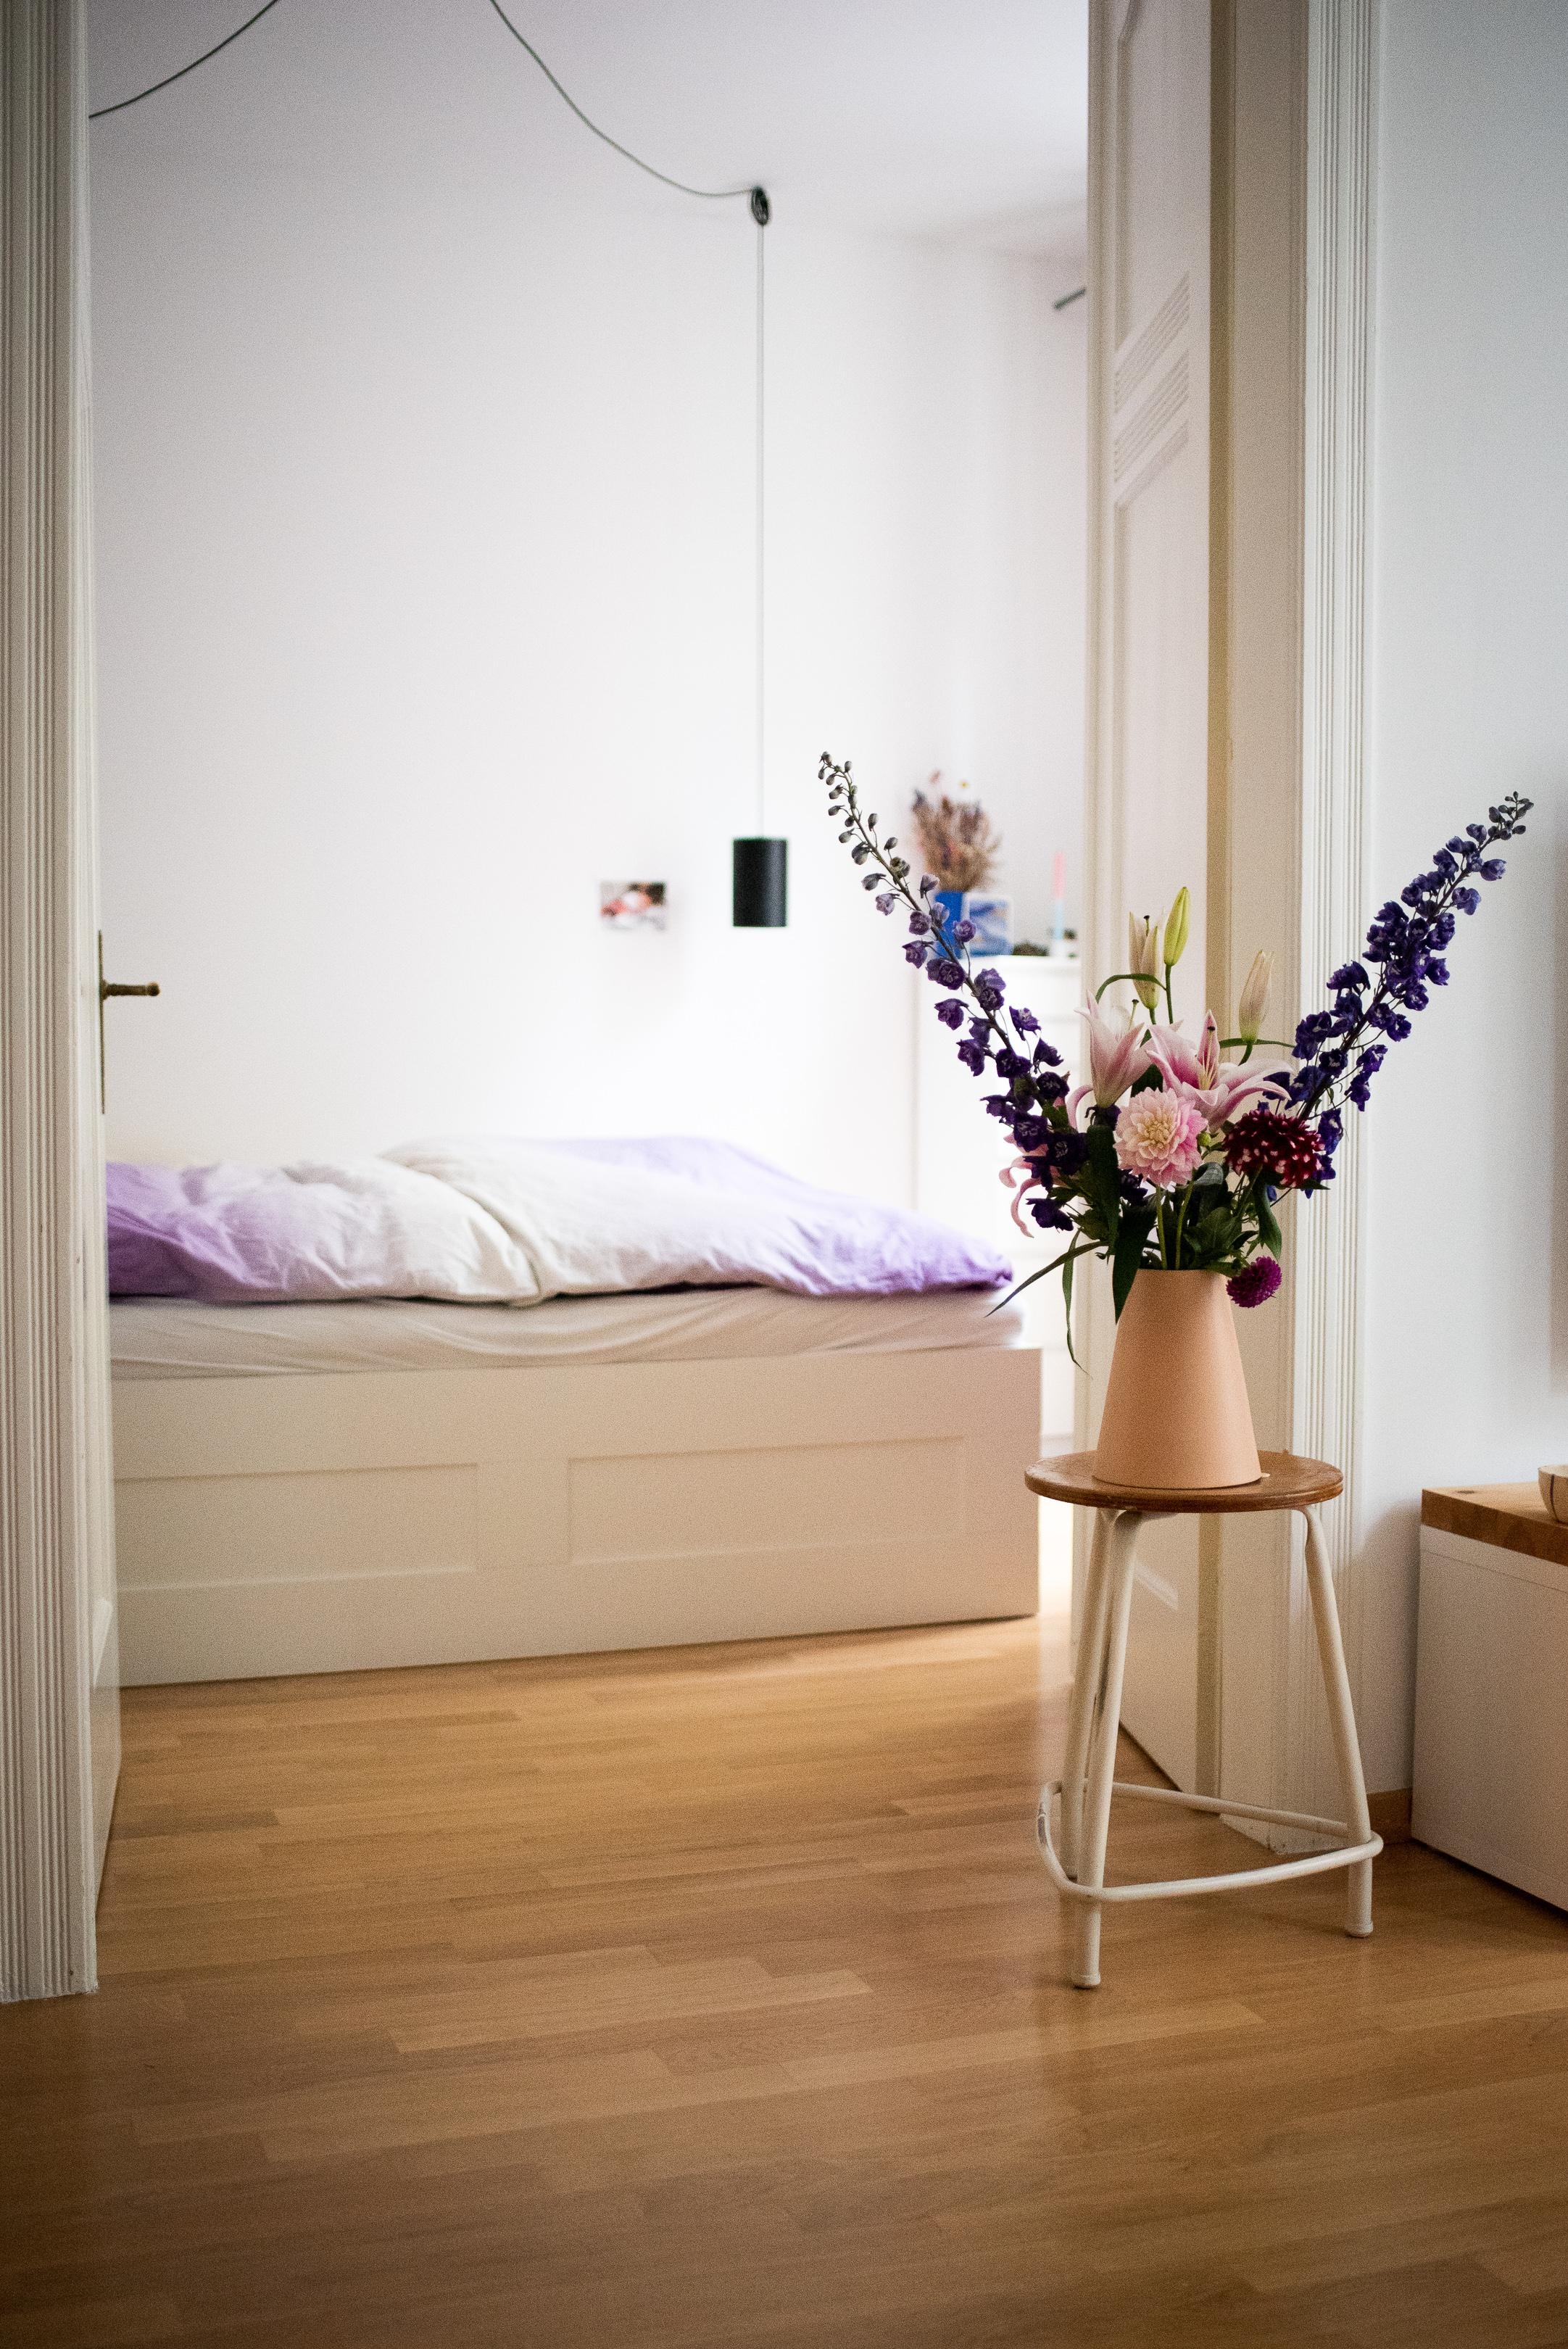 Guten Morgen! #schlafzimmer #bedroom #interiorstyle #freshflowers #vase #interiorinspo